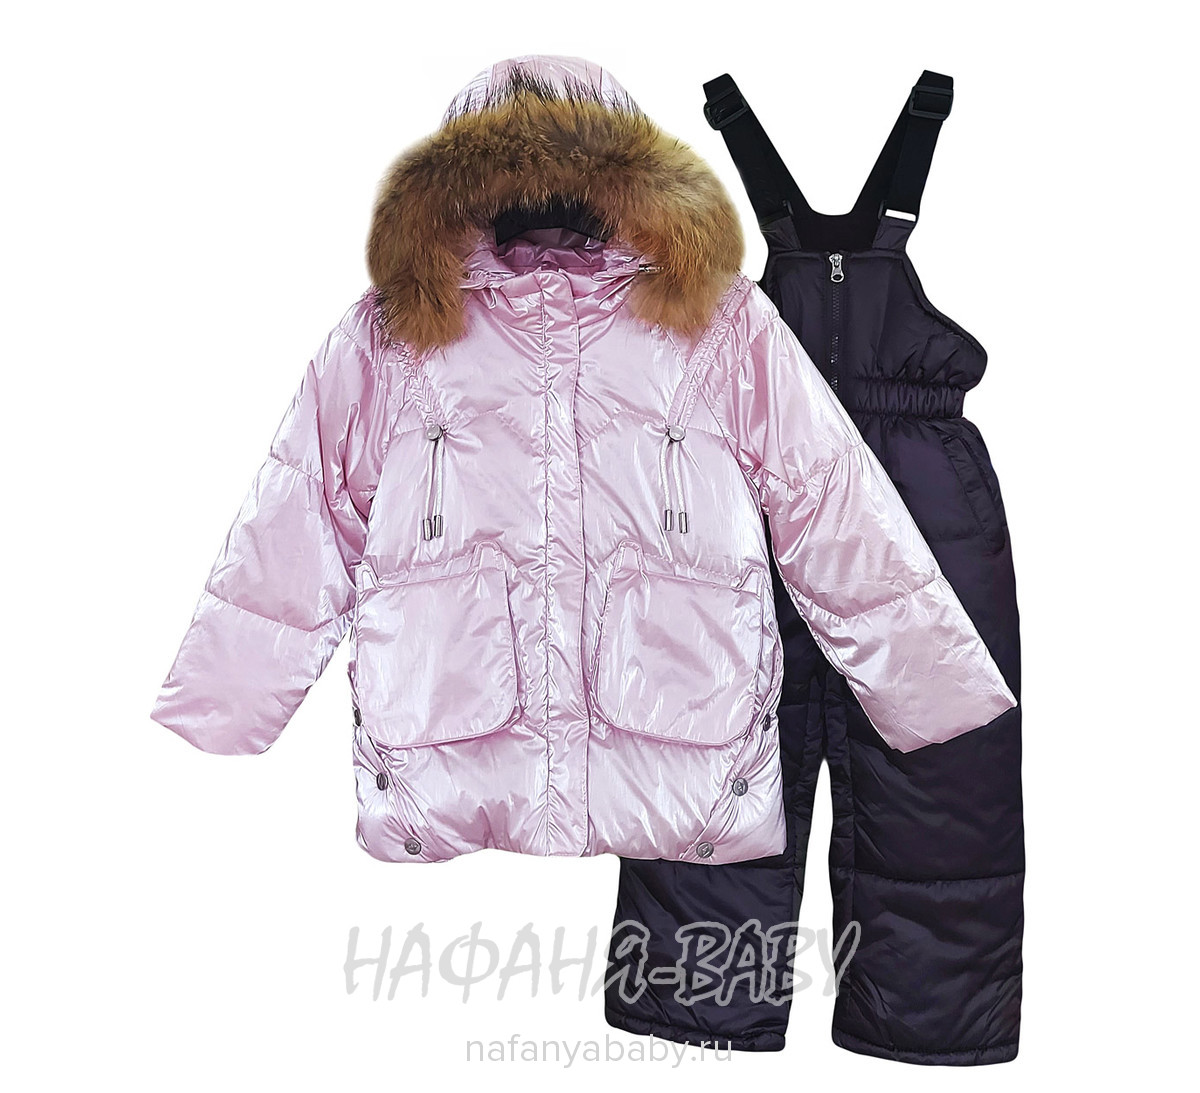 Зимний костюм DELFIN FREE, купить в интернет магазине Нафаня. арт: 2281.